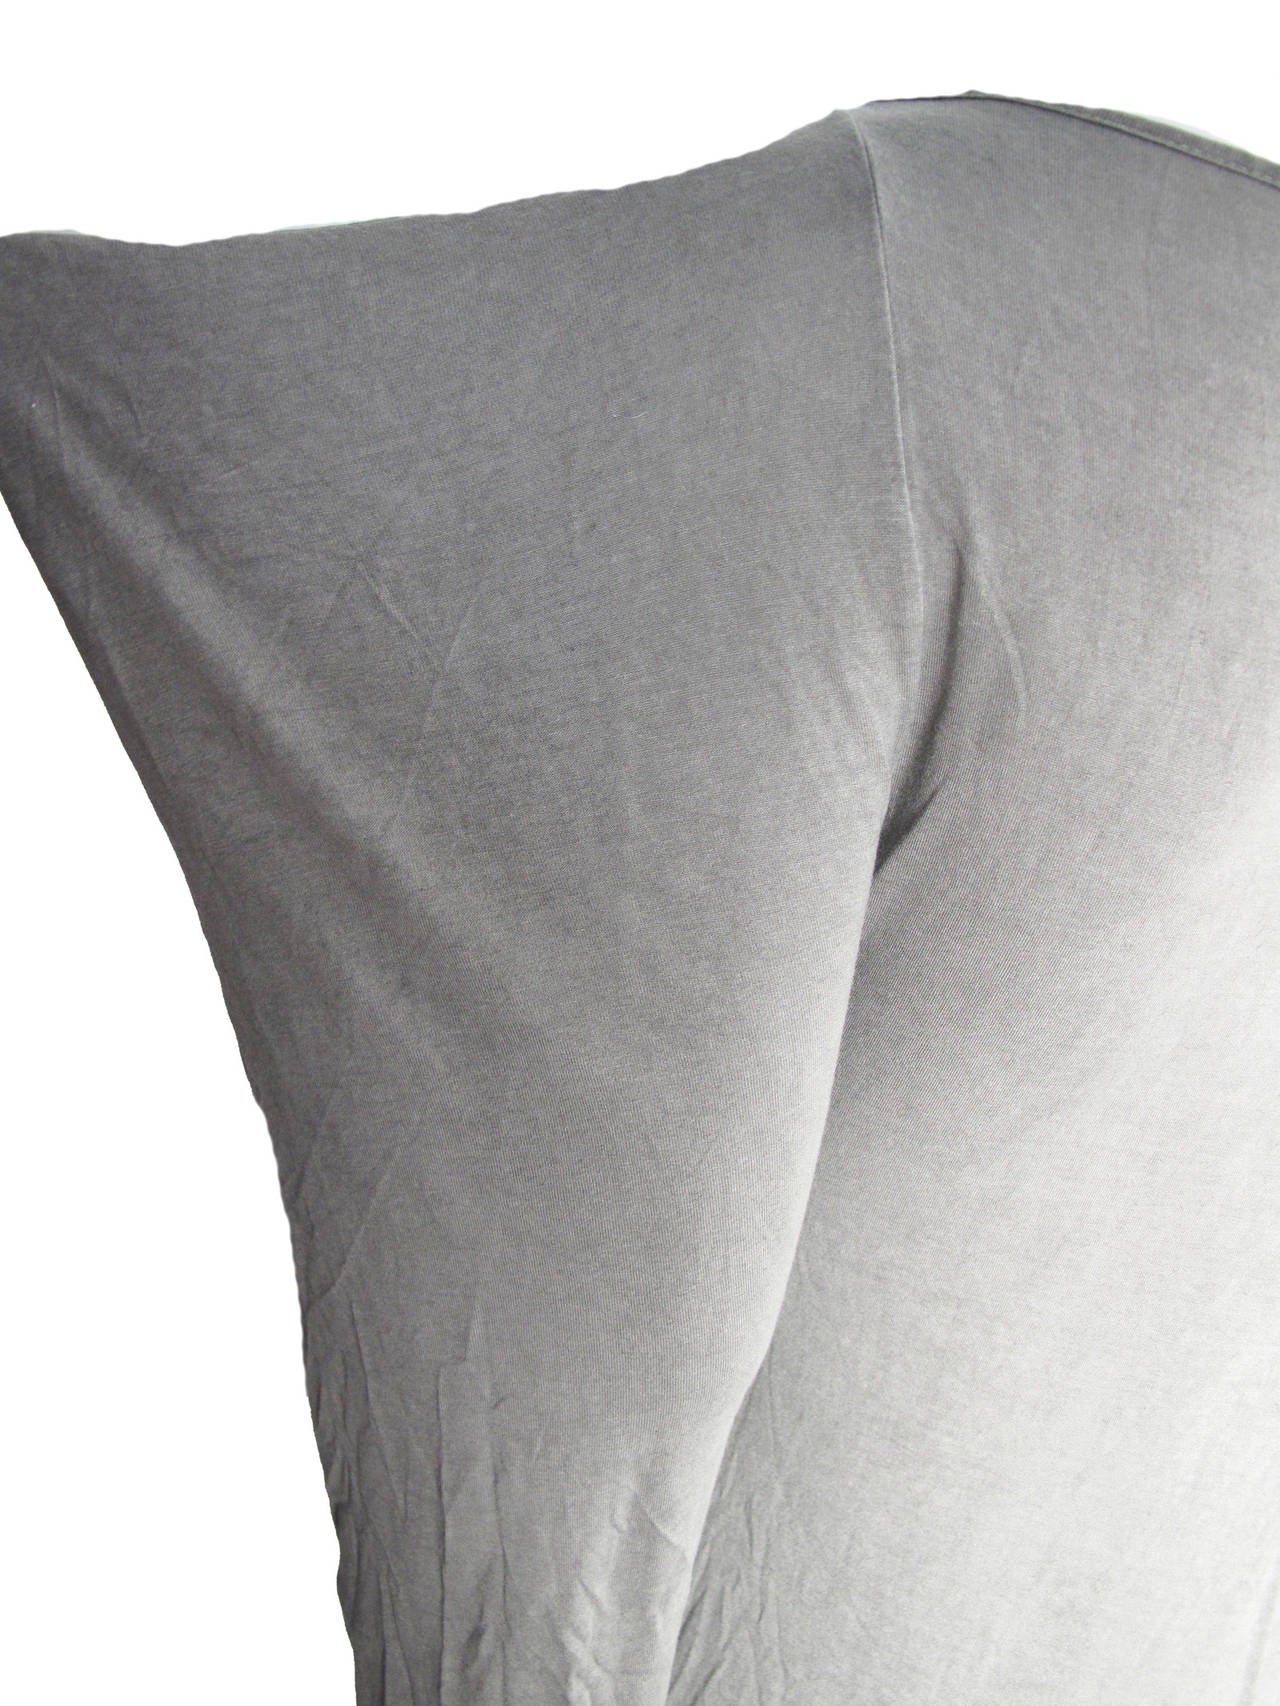 Women's Vivienne Westwood Anglomania Grey Tee Shirt Dress